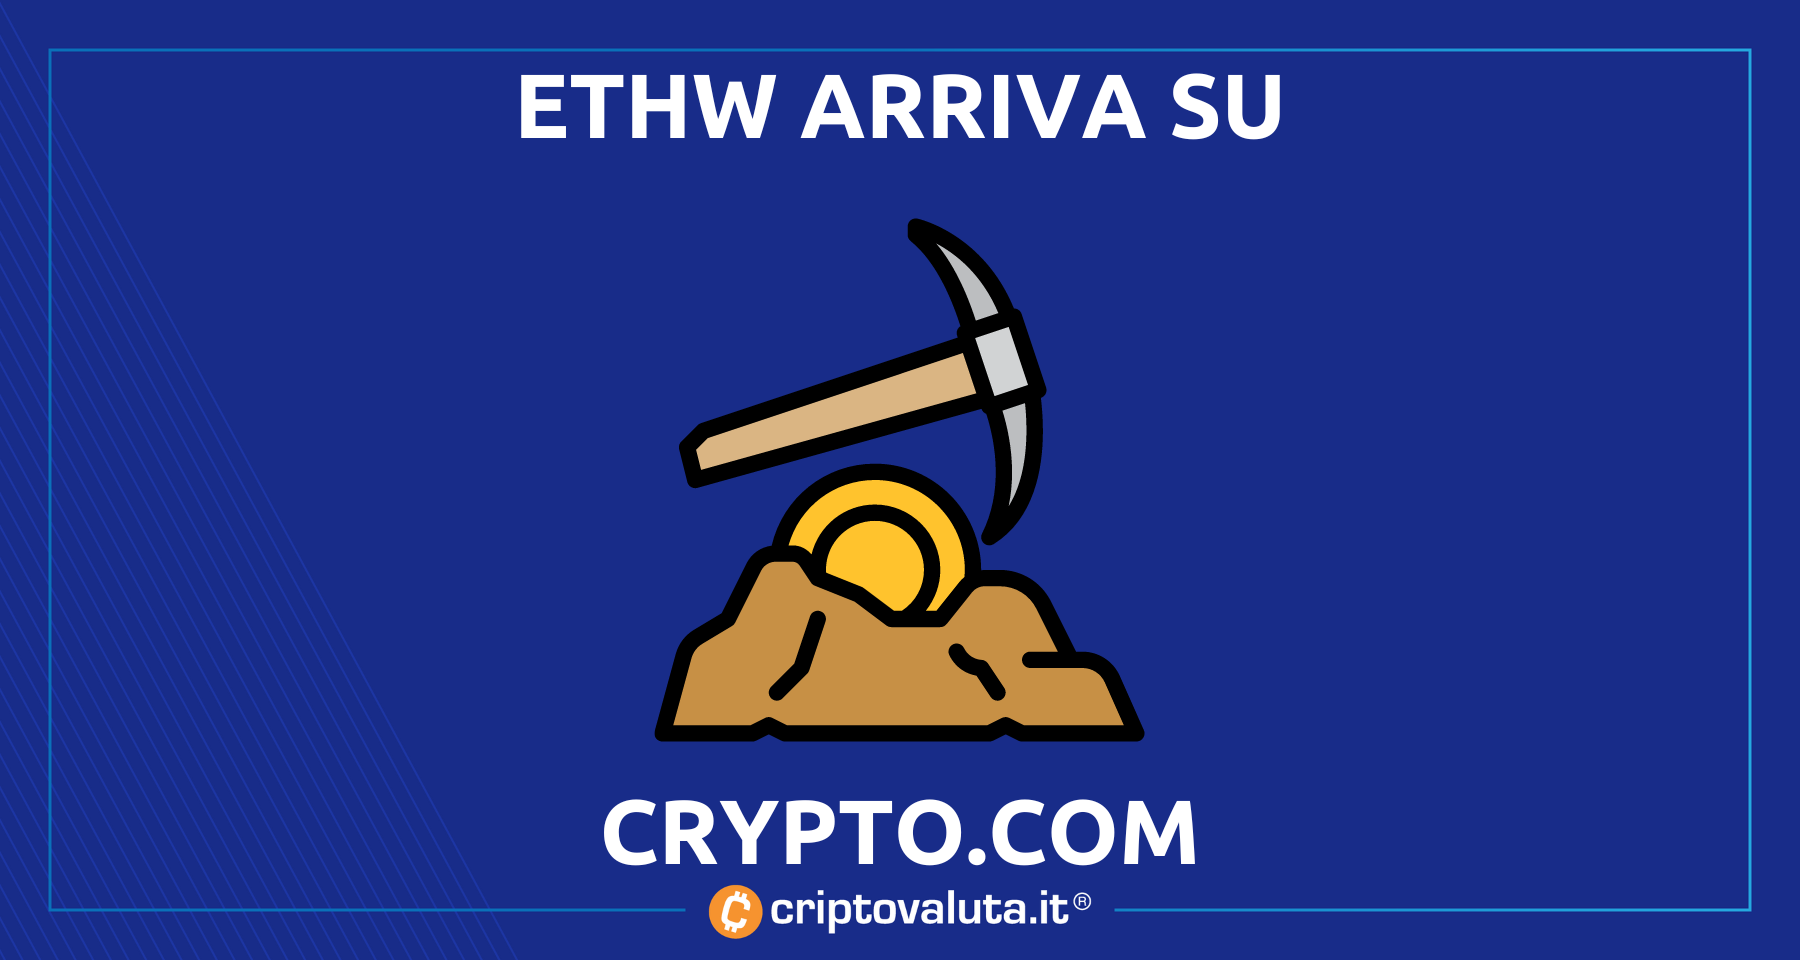 Ethereum PoW listata su Crypto.com! | Scambi già attivi sull’exchange